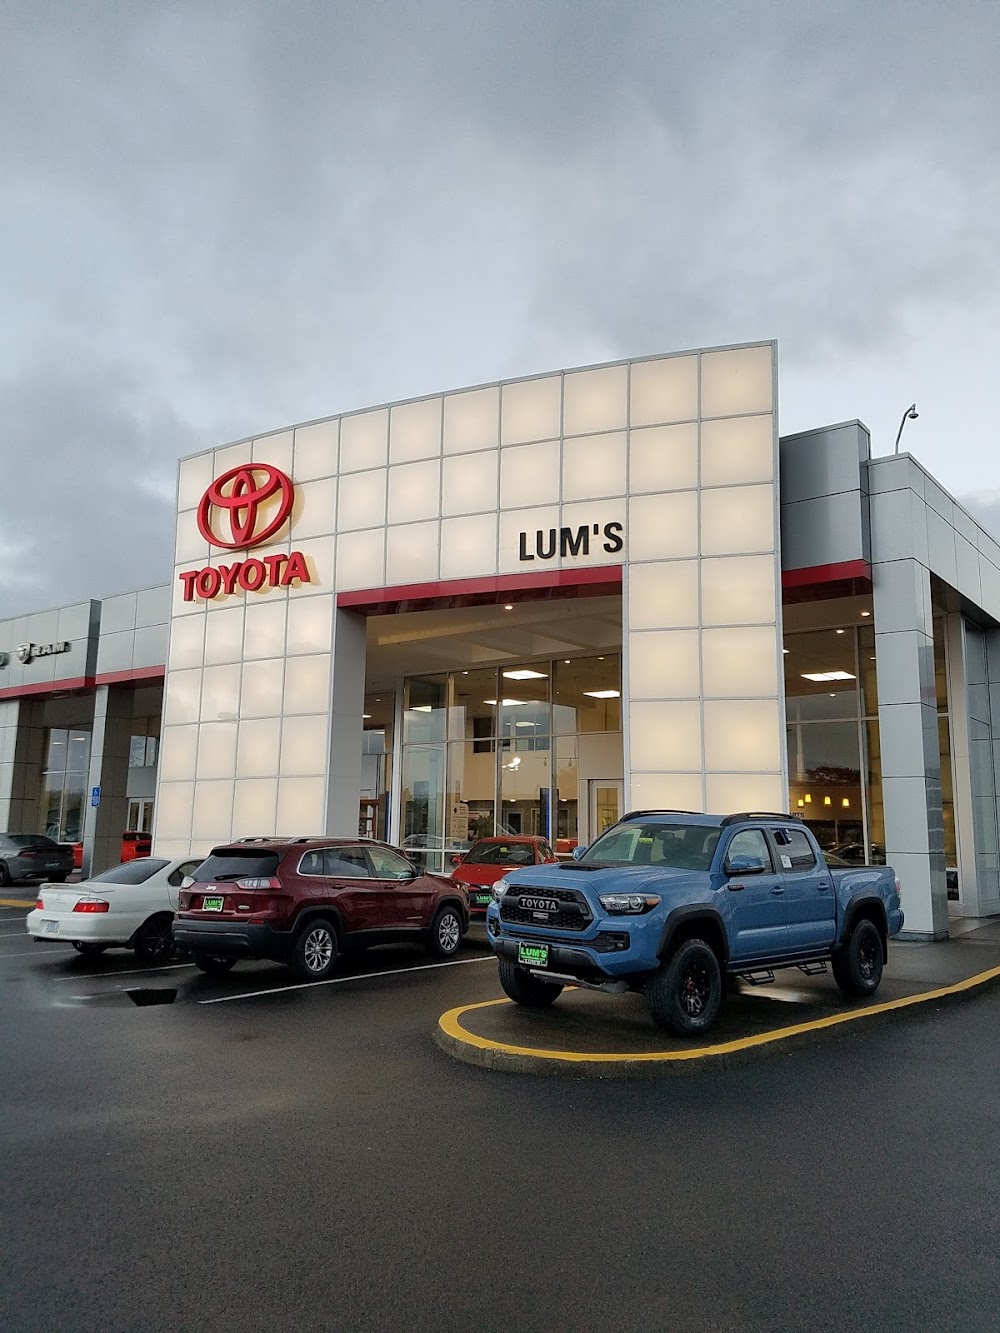 Lum's Toyota